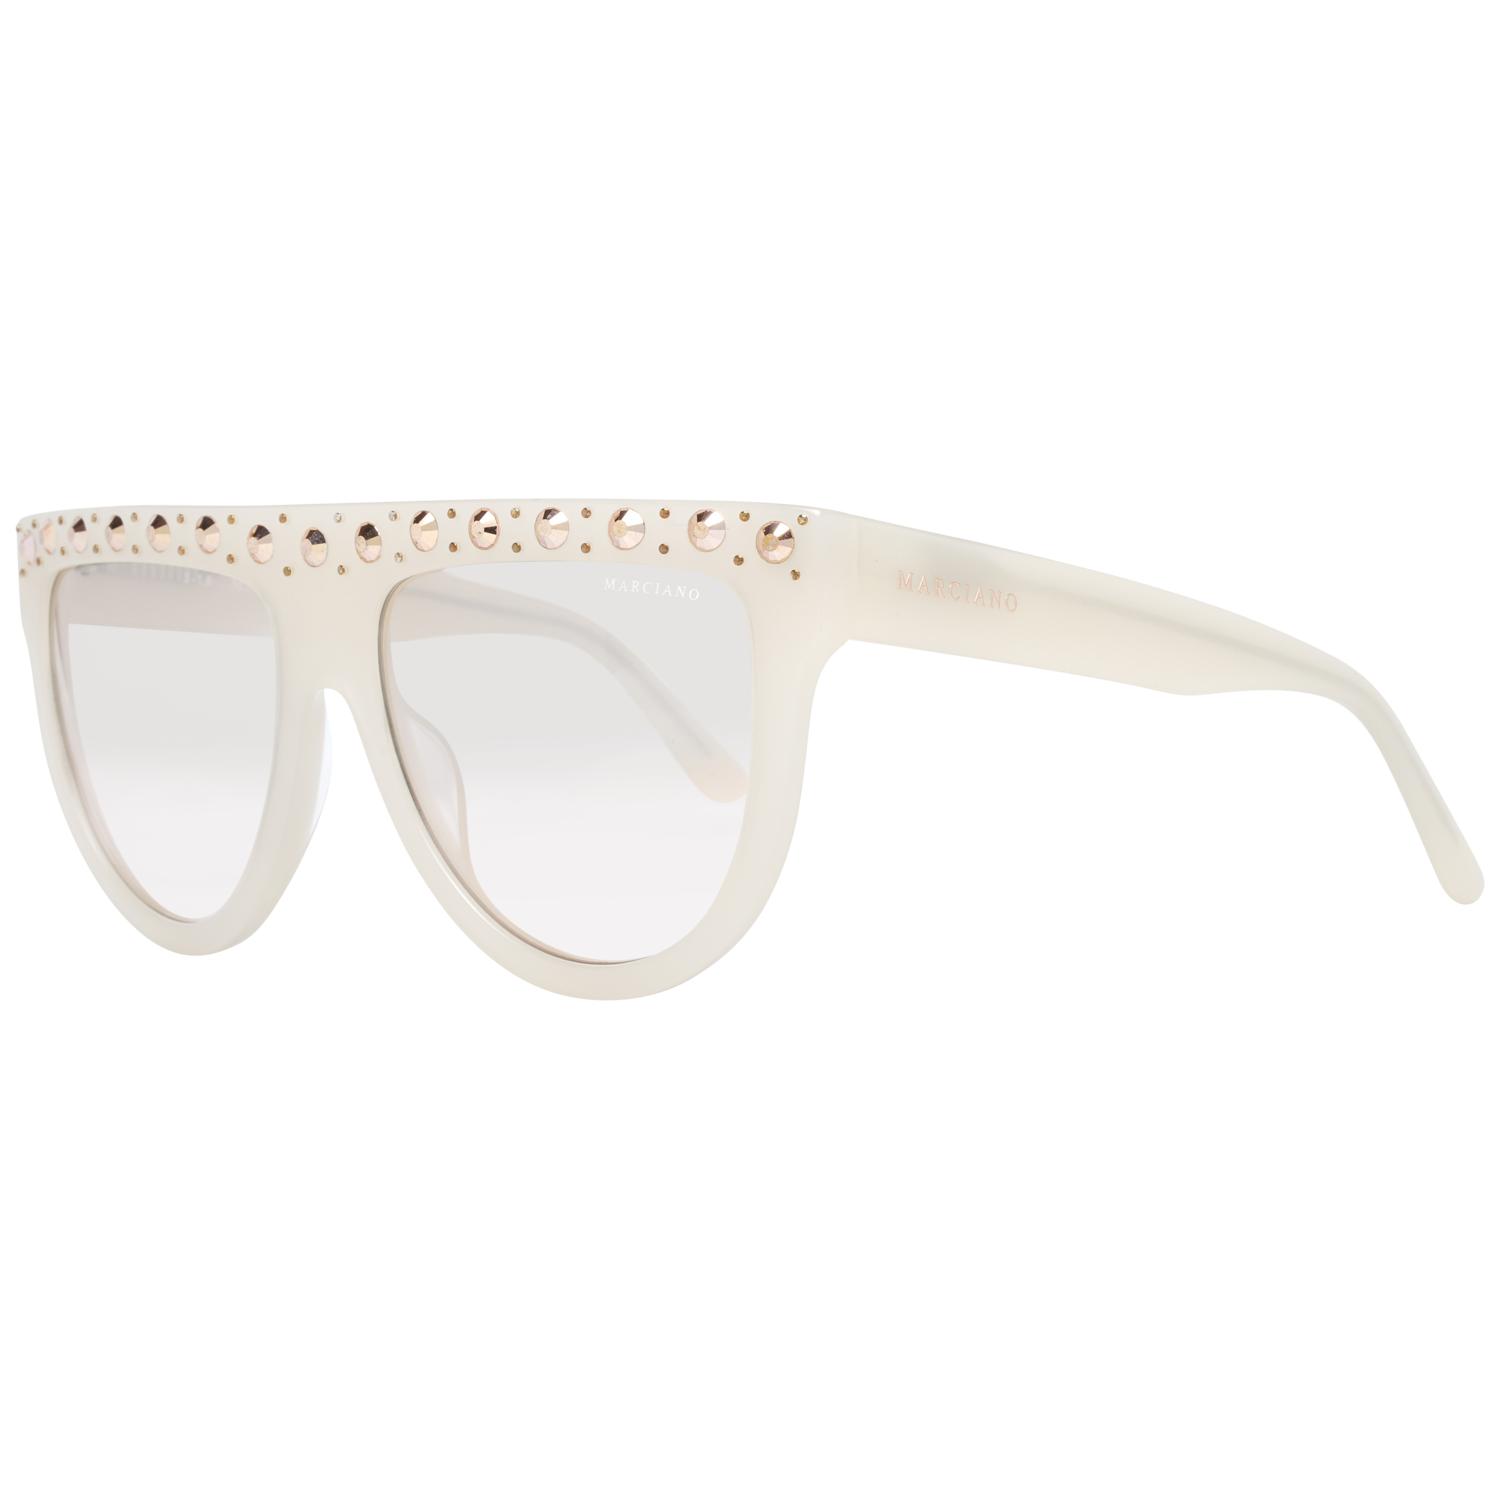 Marciano by Guess Sunglasses Marciano by Guess Sunglasses GM0795 25F 56 Eyeglasses Eyewear UK USA Australia 